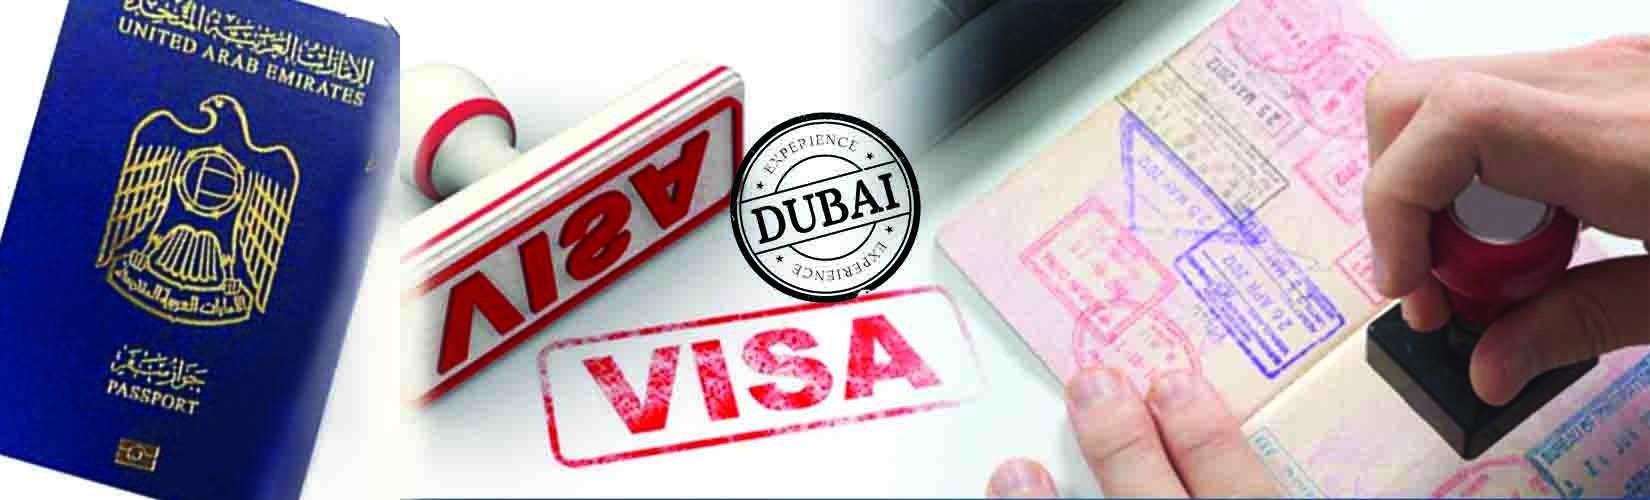 Dubai Travel Info: Complete Dubai Tourist Visa Information